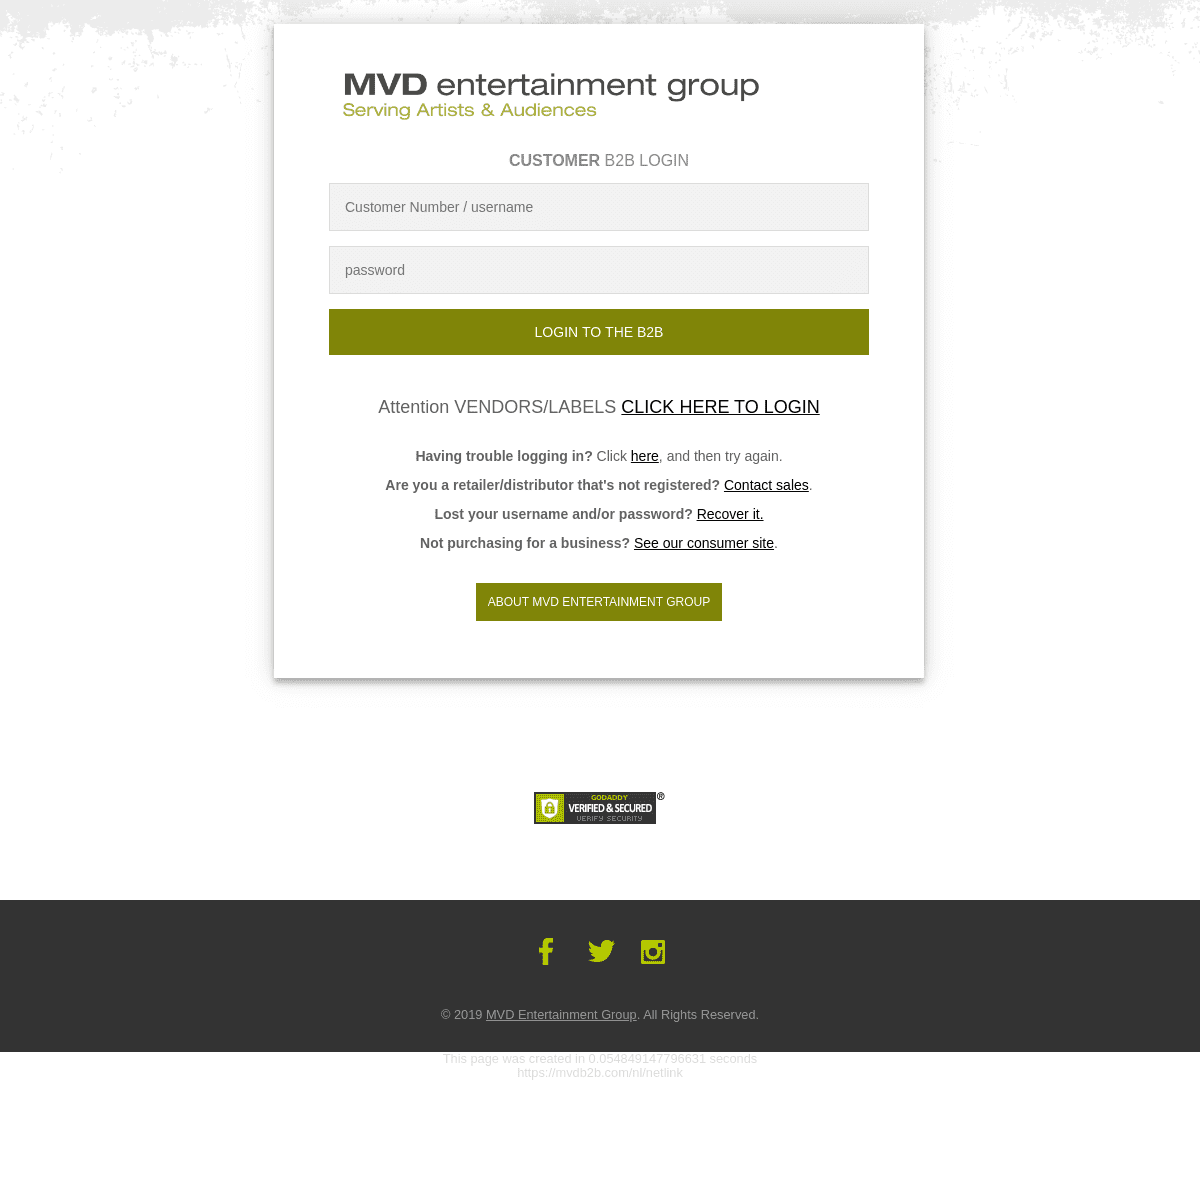 A complete backup of mvdb2b.com